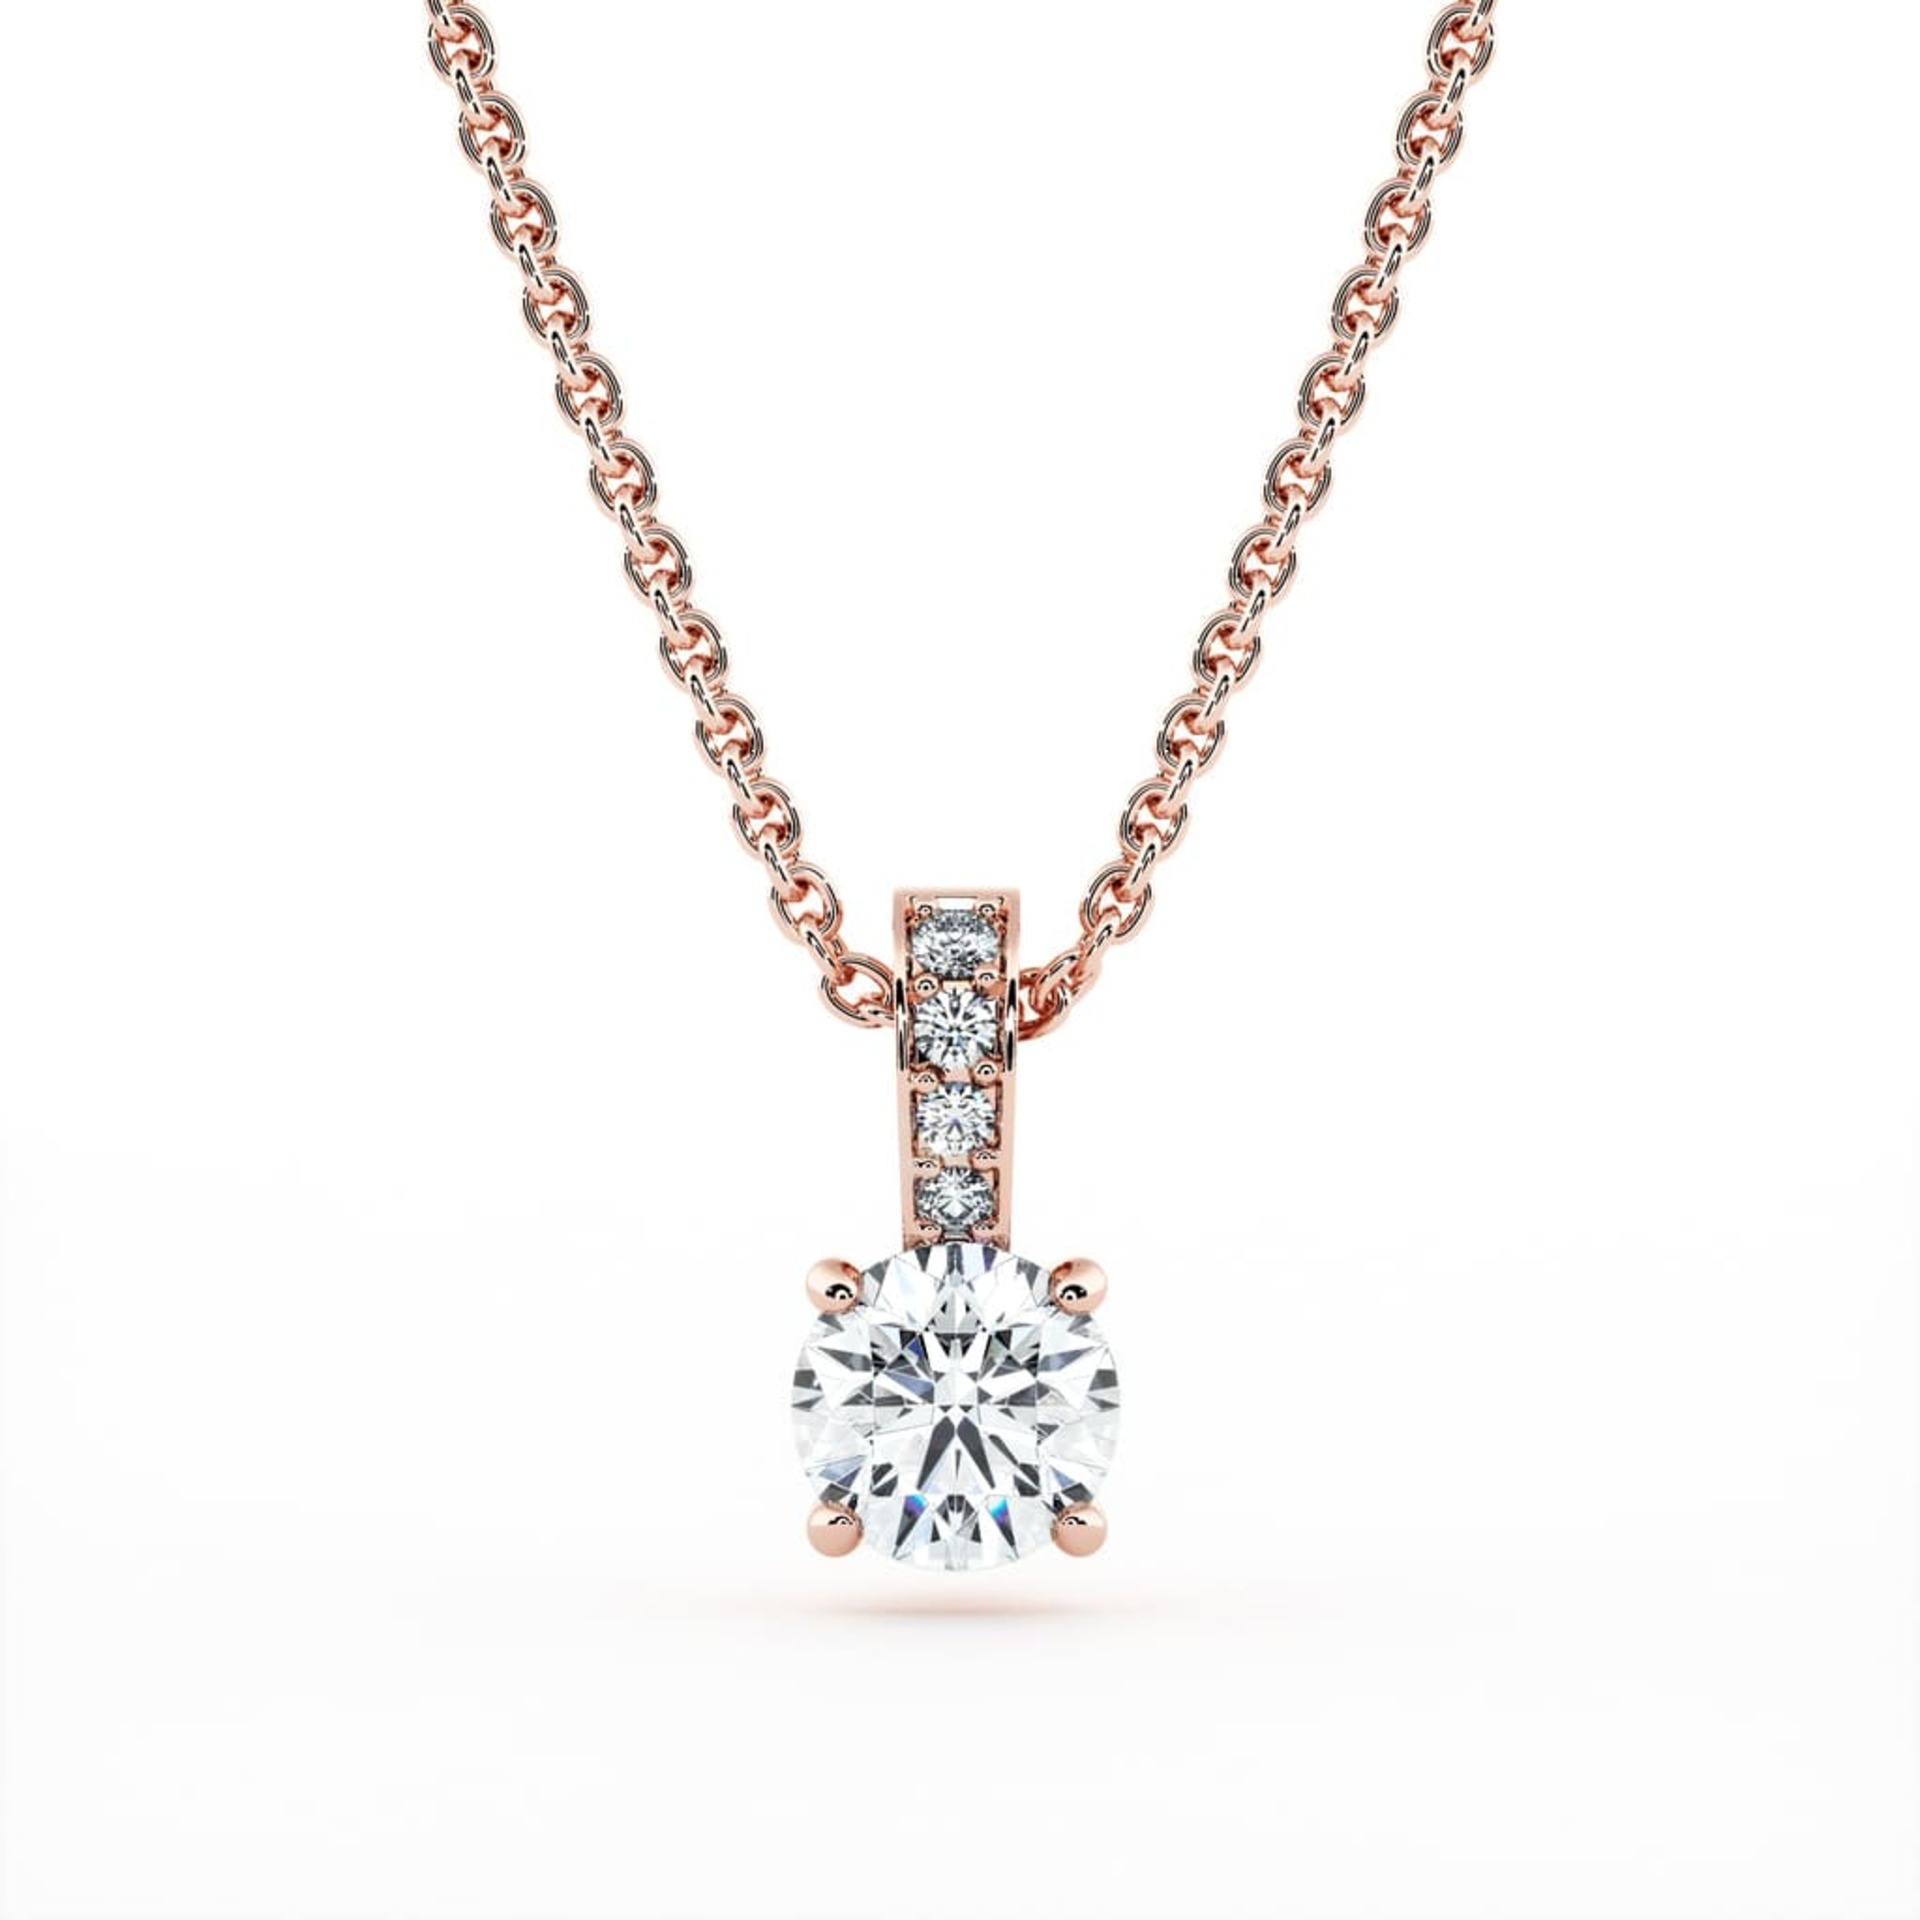 Pendant & Necklace Classics Diamond Pink Gold Bail paved with diamonds